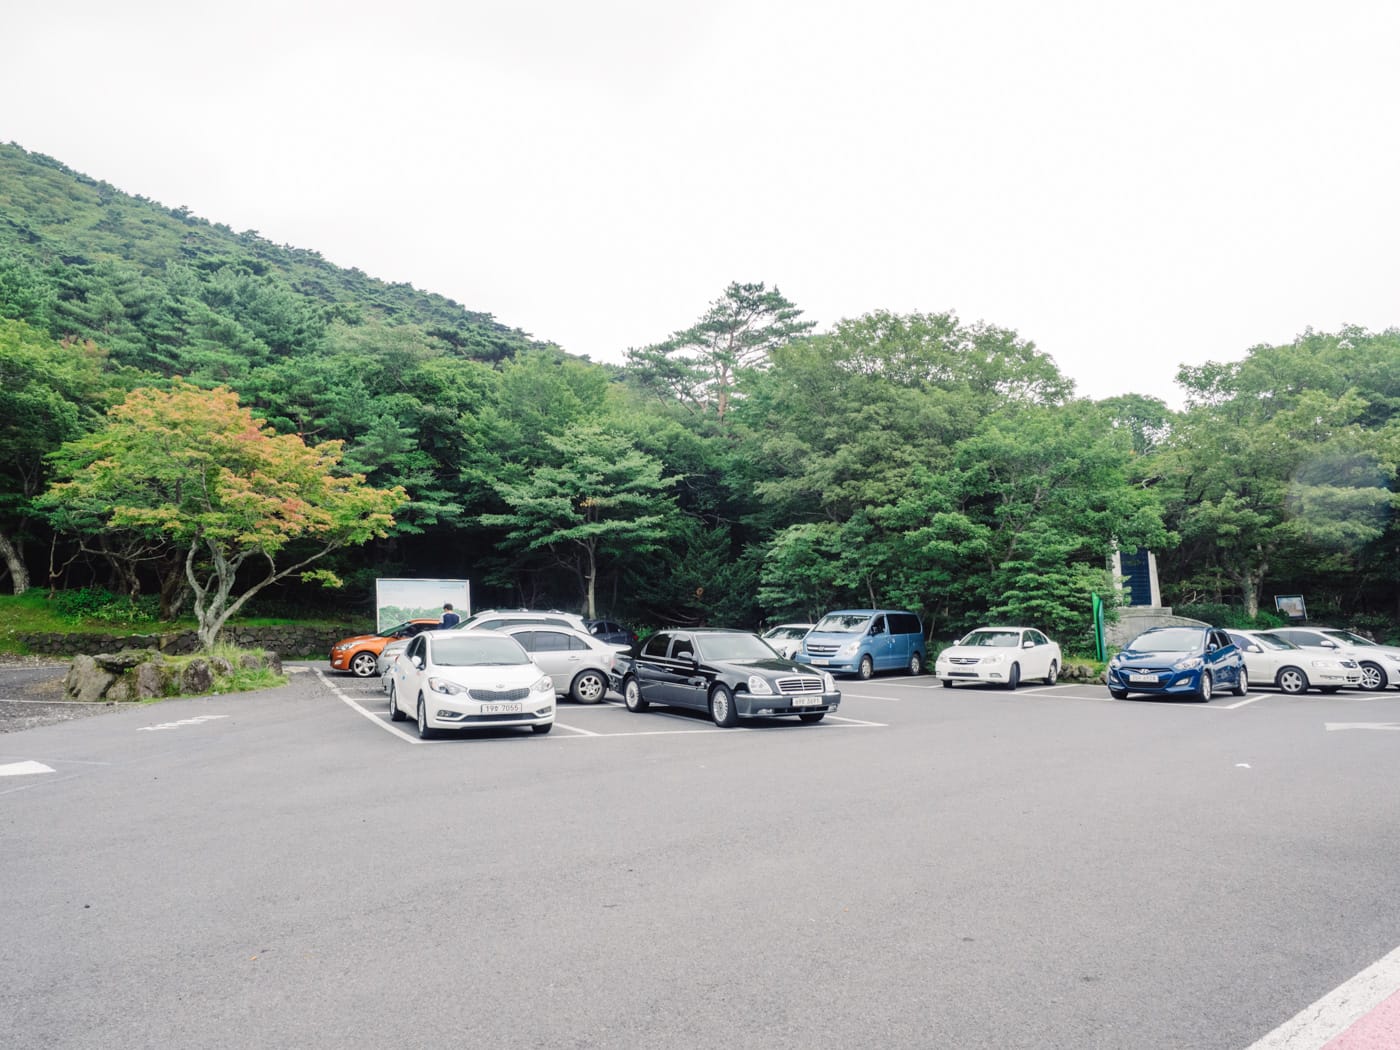 Korea - Mt Hallasan - Carpark